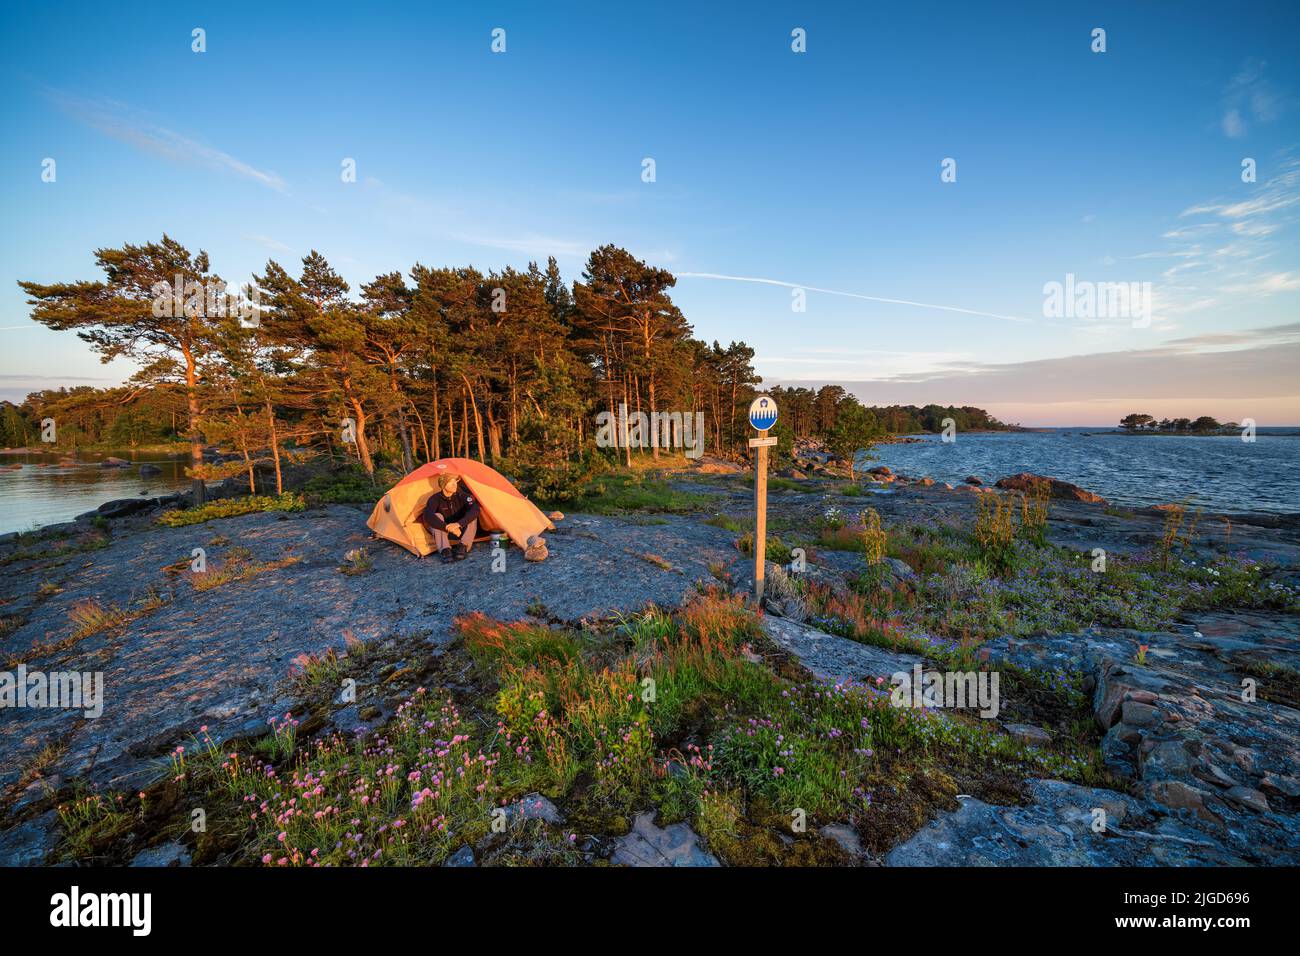 Camping at Kilpisaari island, Kotka, Finland Stock Photo